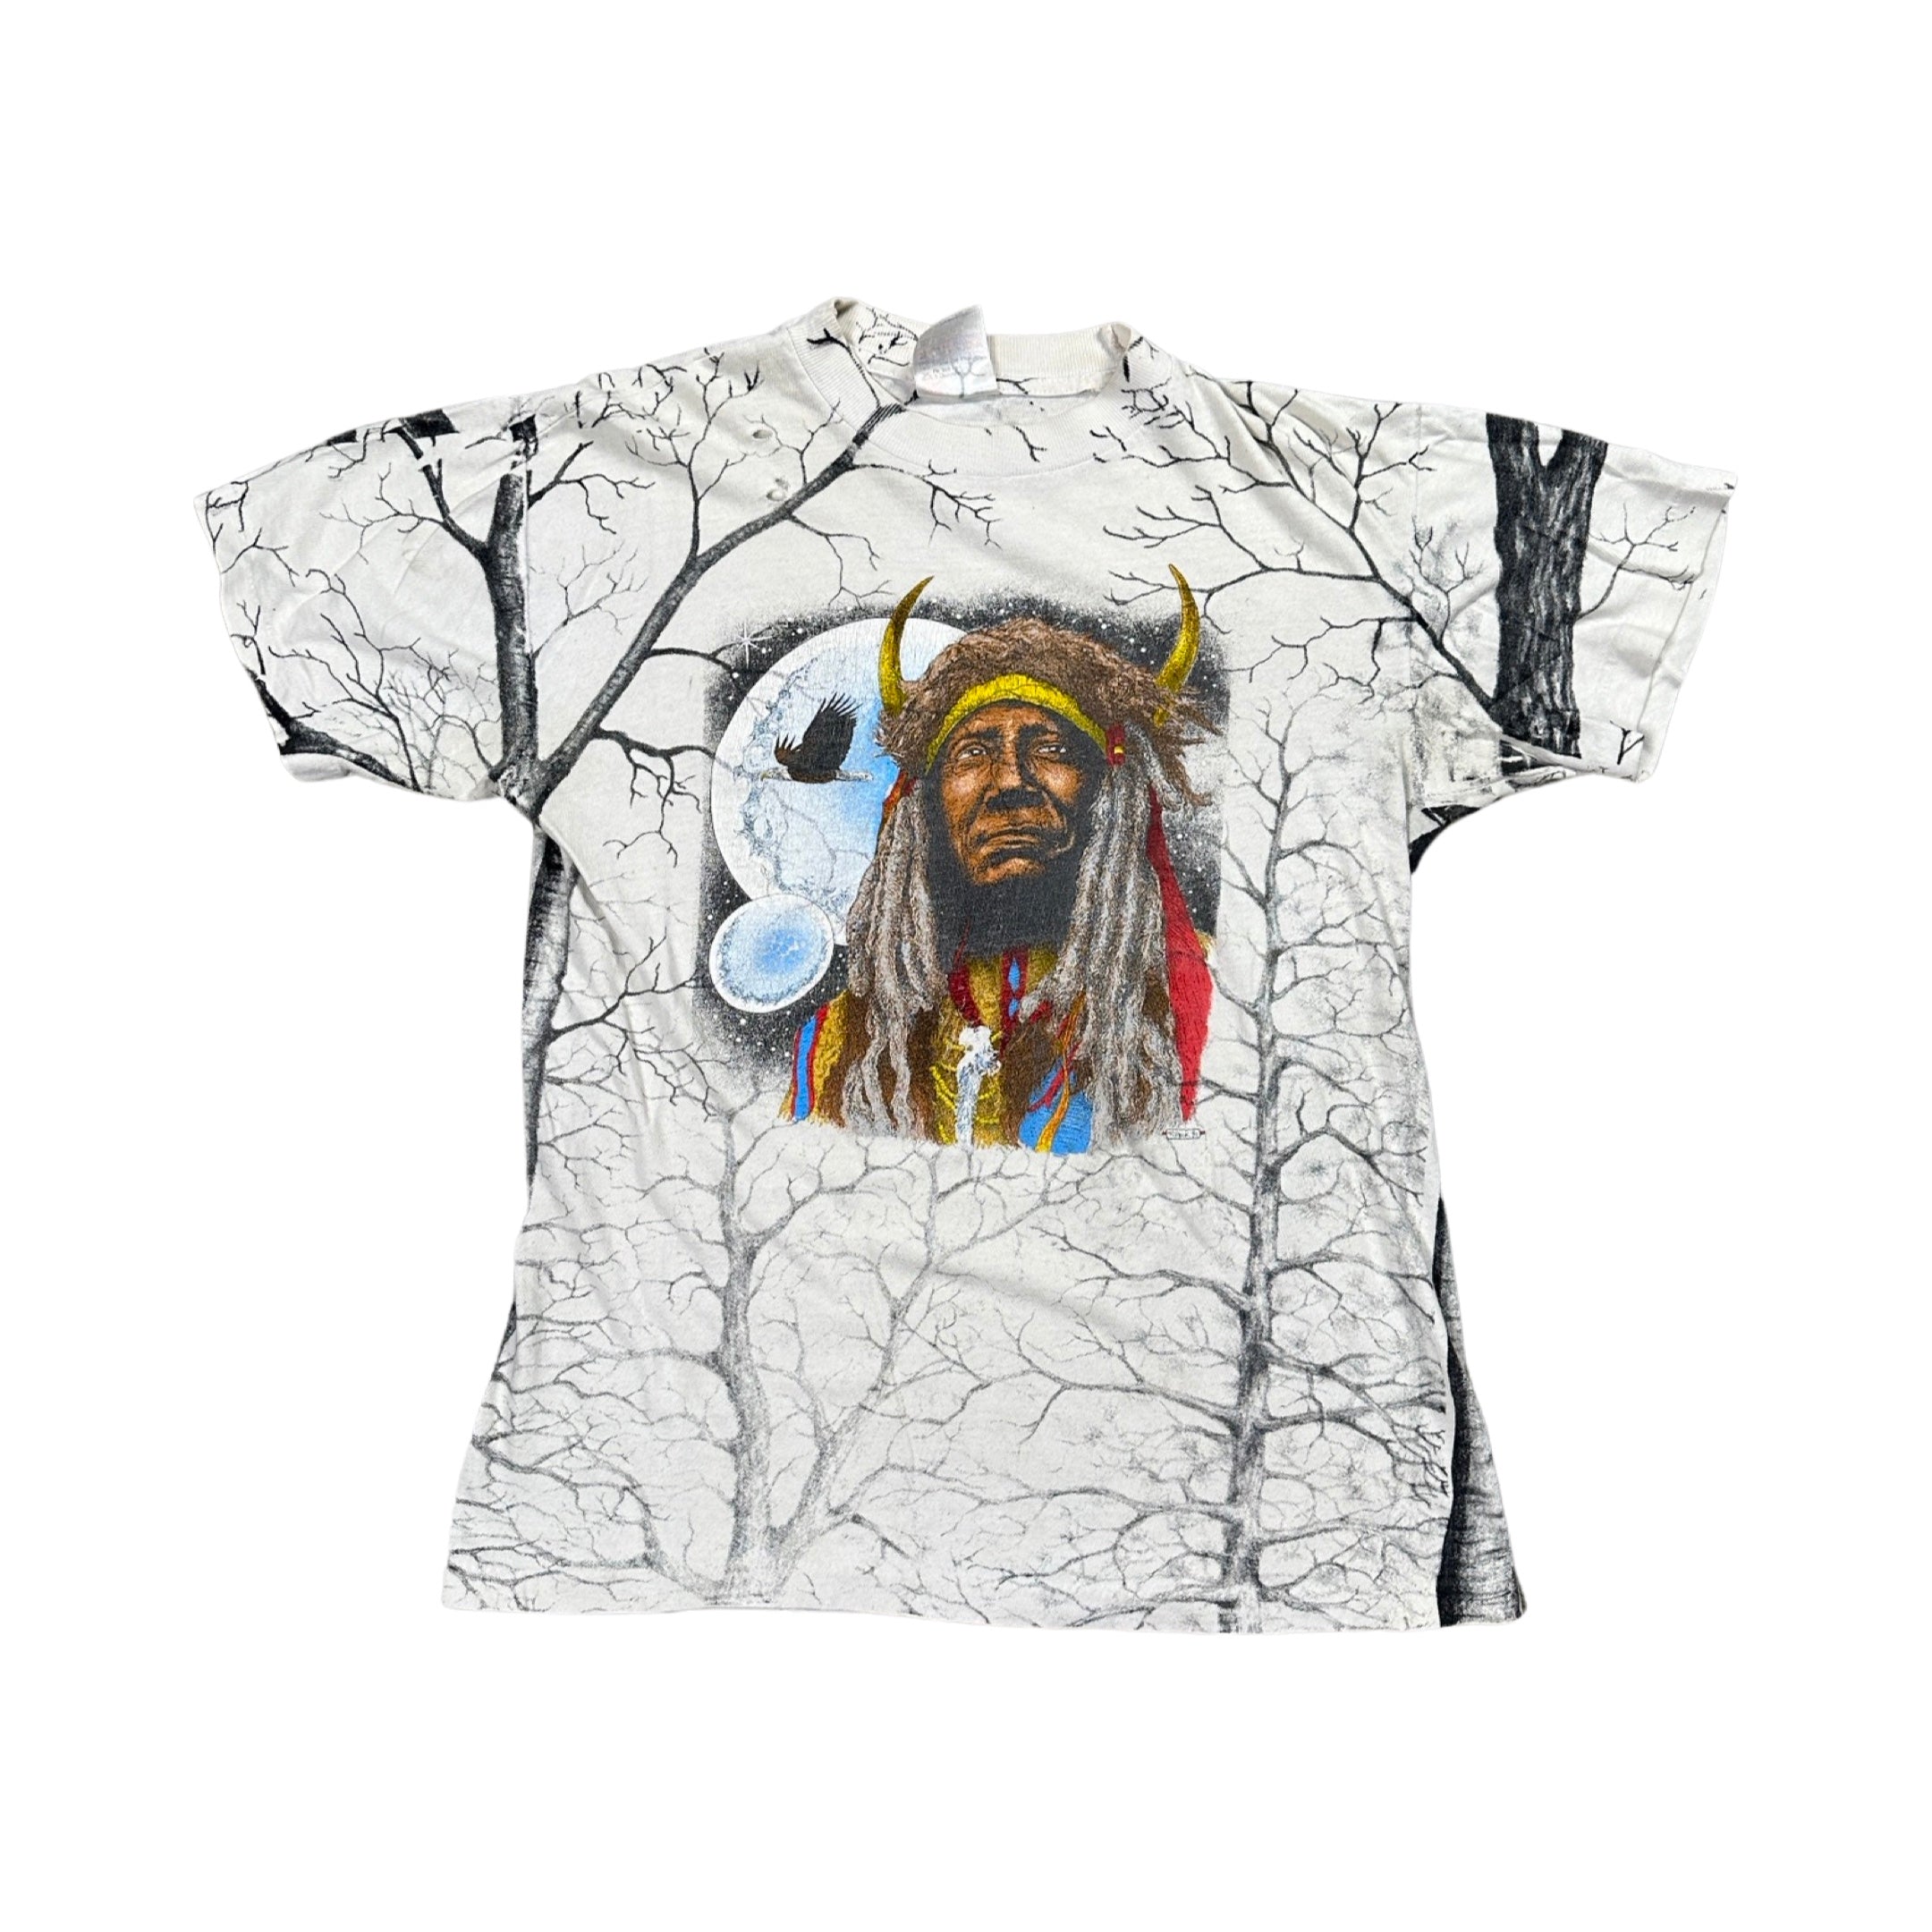 Native American All-Over Print 1991 T-Shirt (Medium)